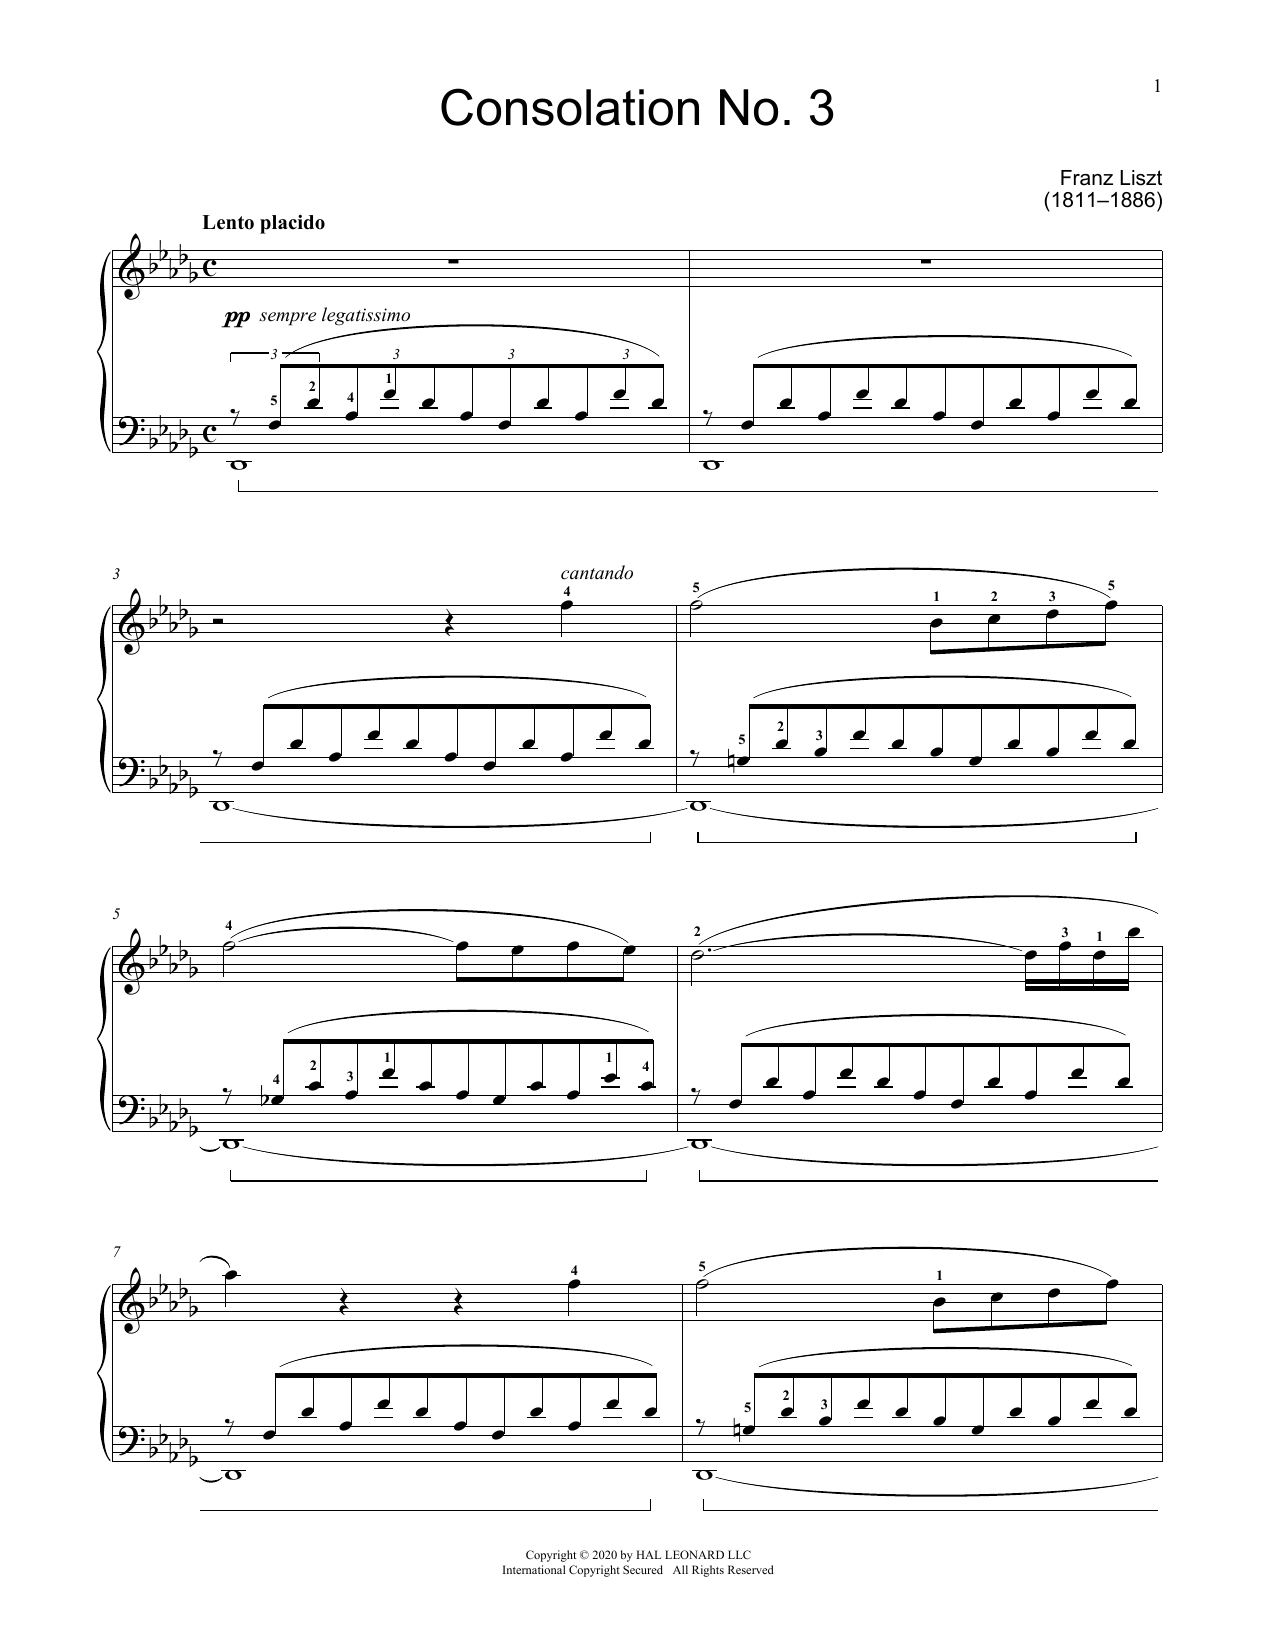 Download Franz Liszt Consolation No. 3 In D-Flat Major Sheet Music